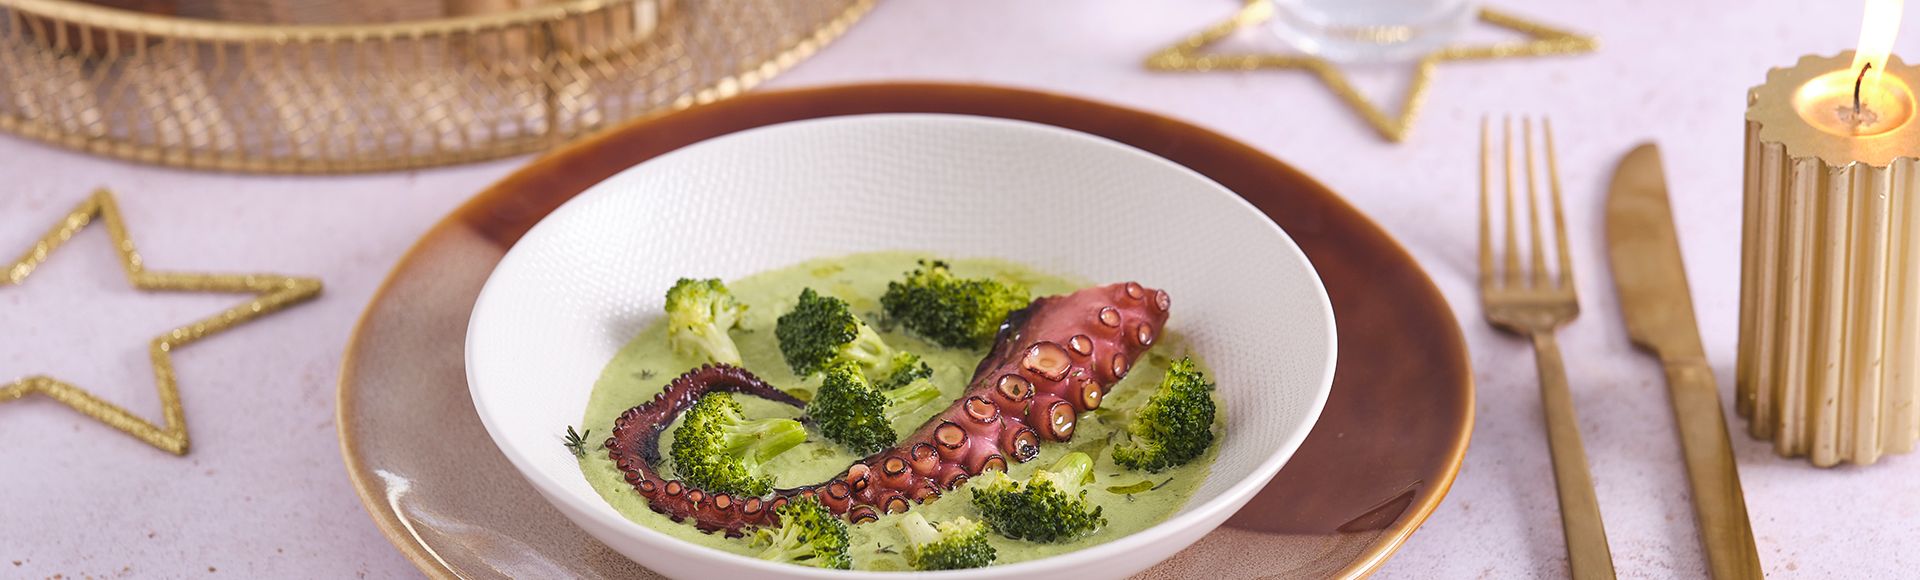 Roasted octopus on broccoli cream